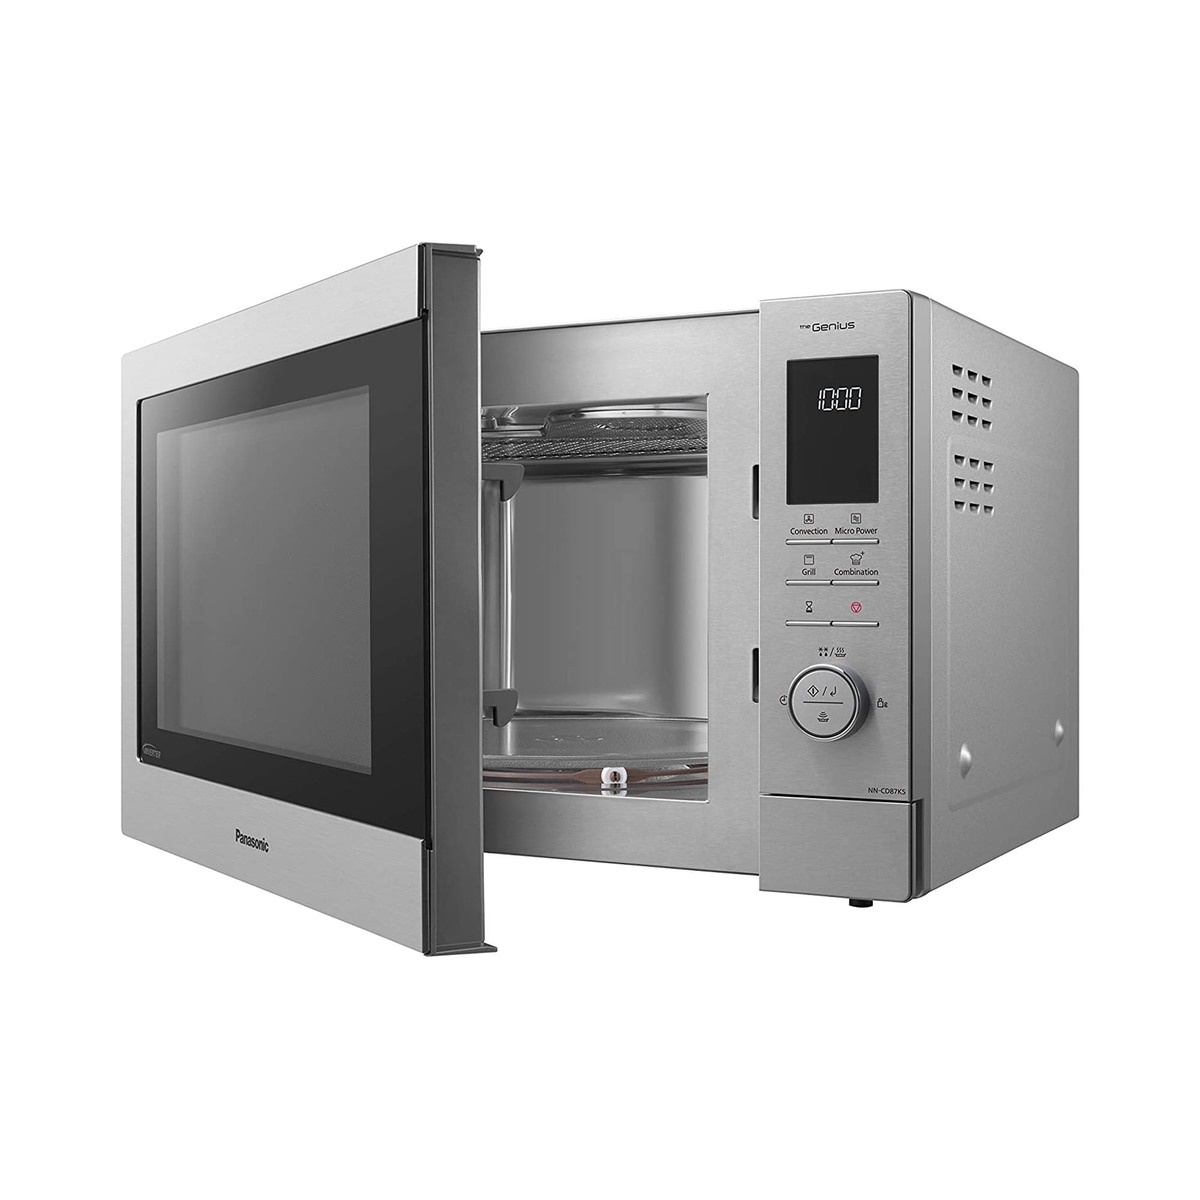 Panasonic Air Frying Microwave Oven NN-CD87KSKPQ 34Ltr